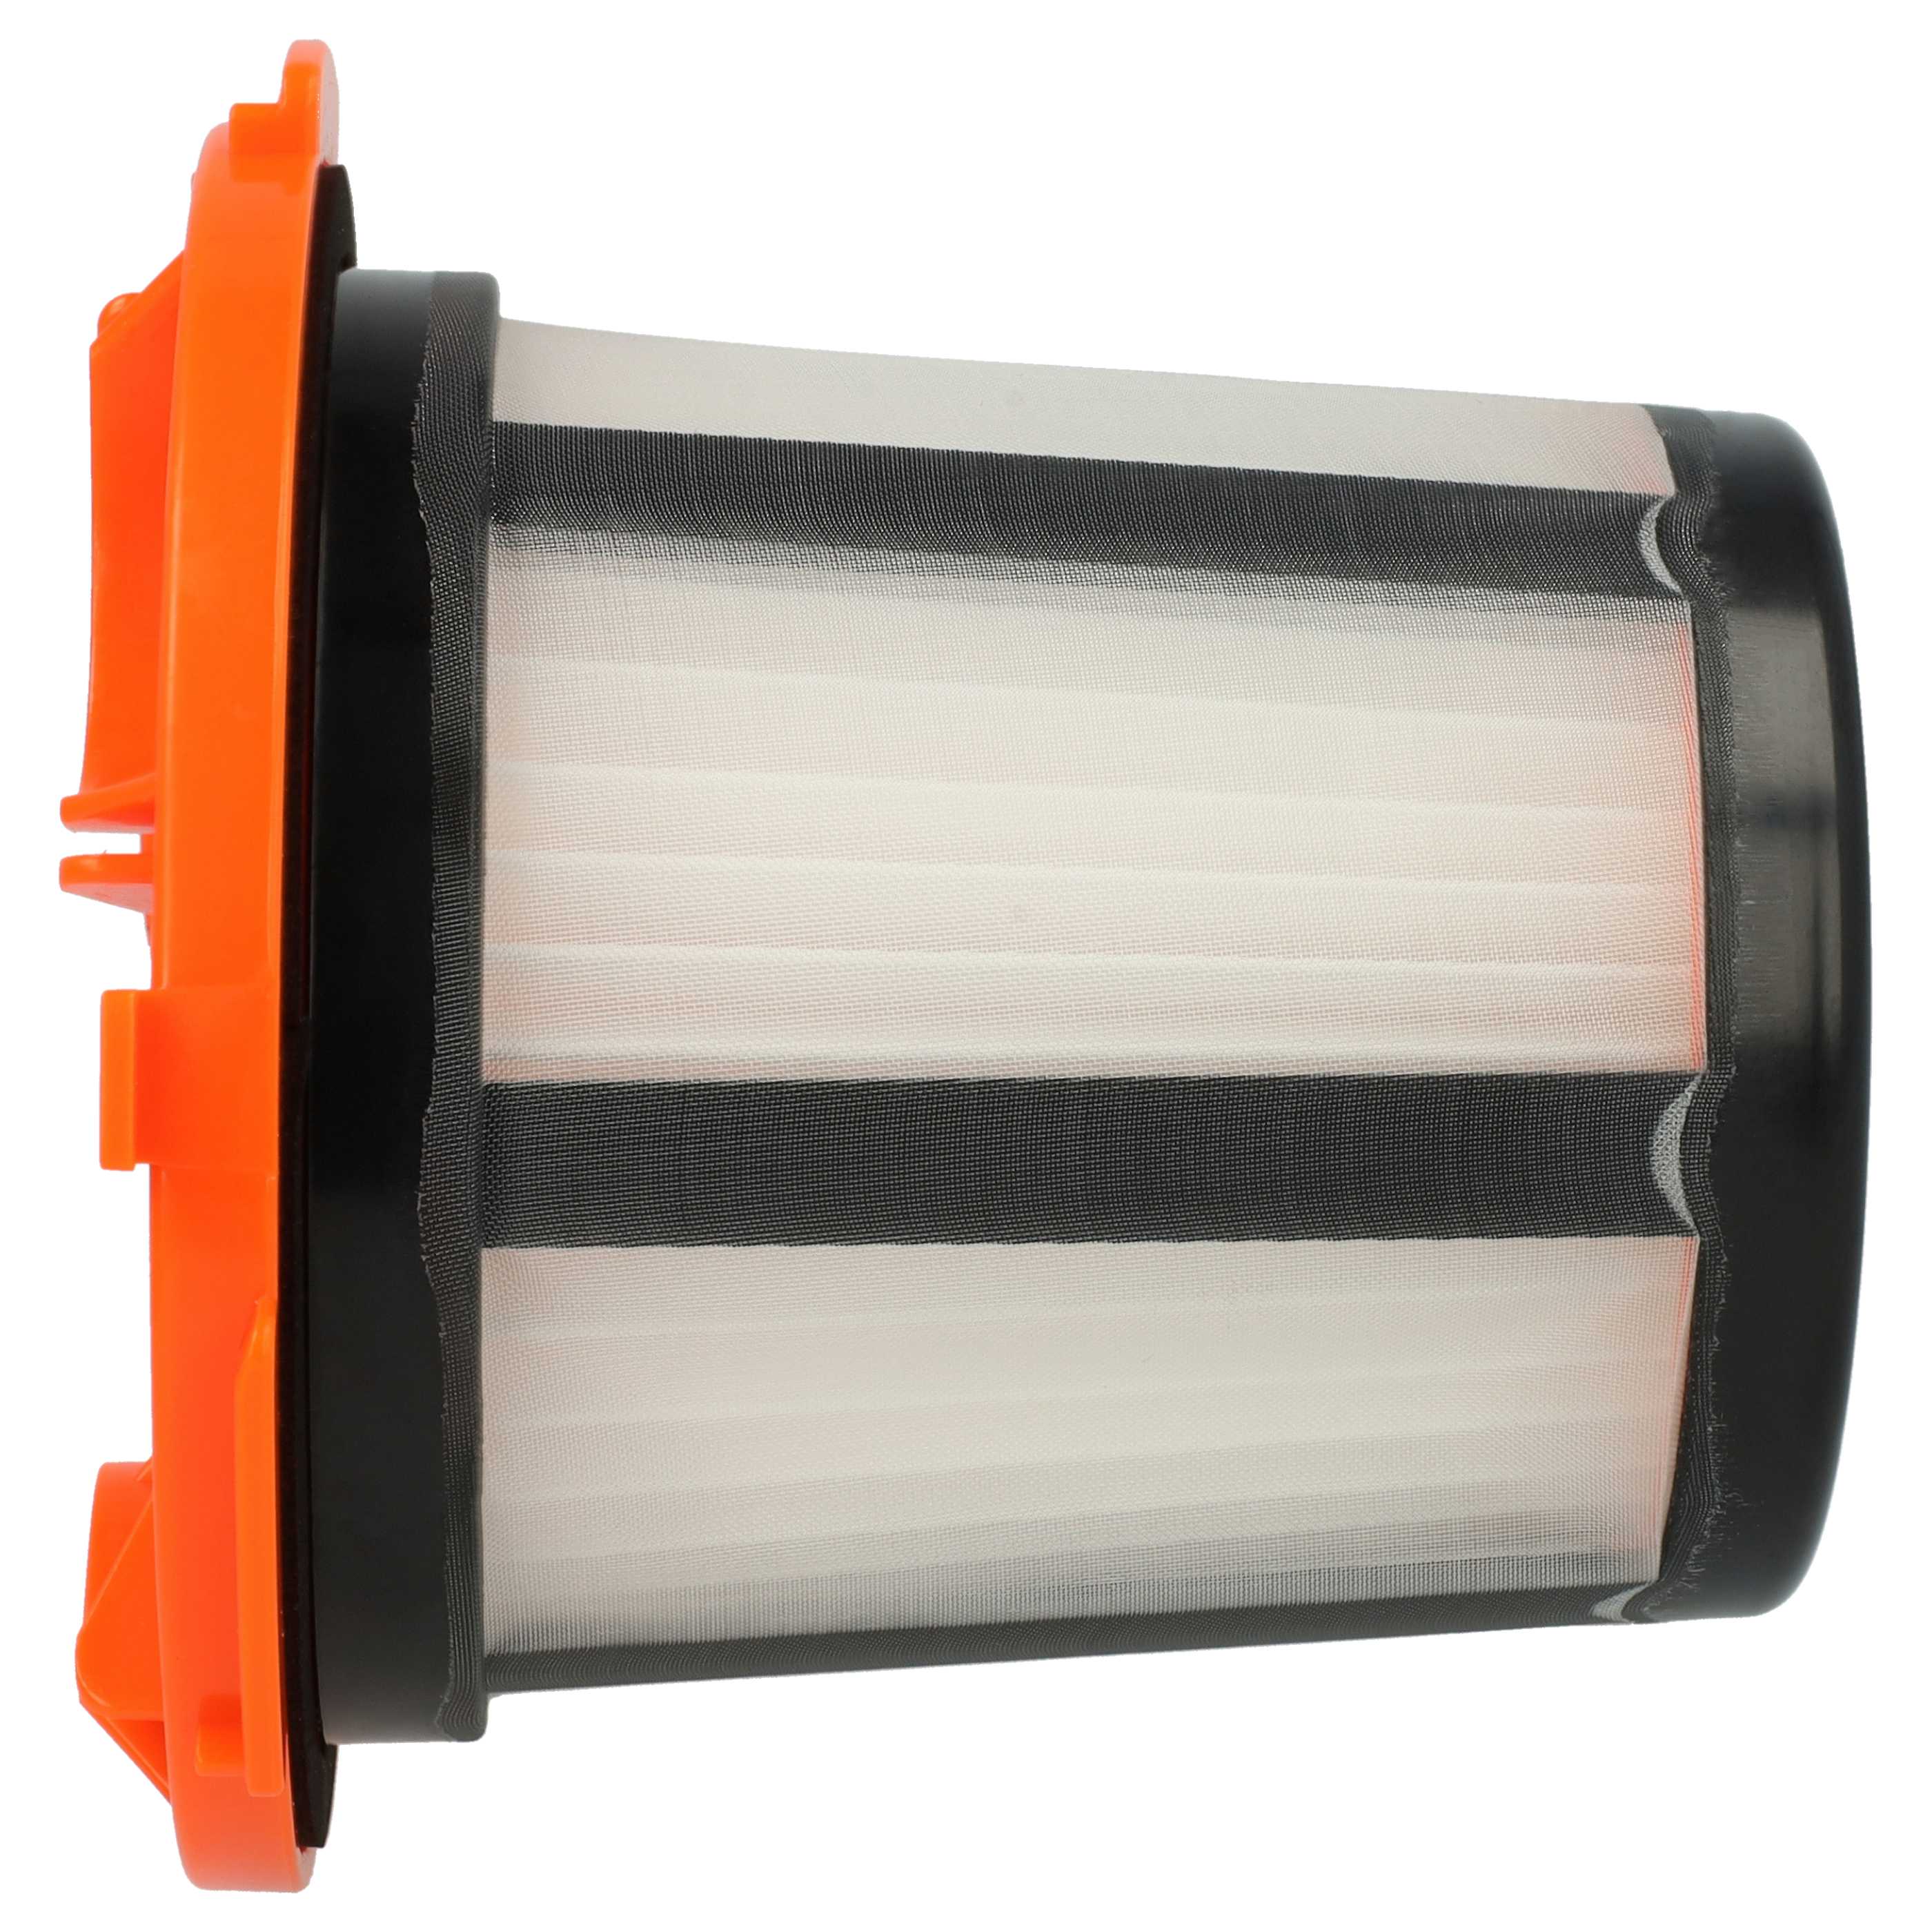 3x HEPA filter / motor filter / micro-filter replaces AEG/Electrolux 4071387353 for Zanussi Vacuum Cleaner